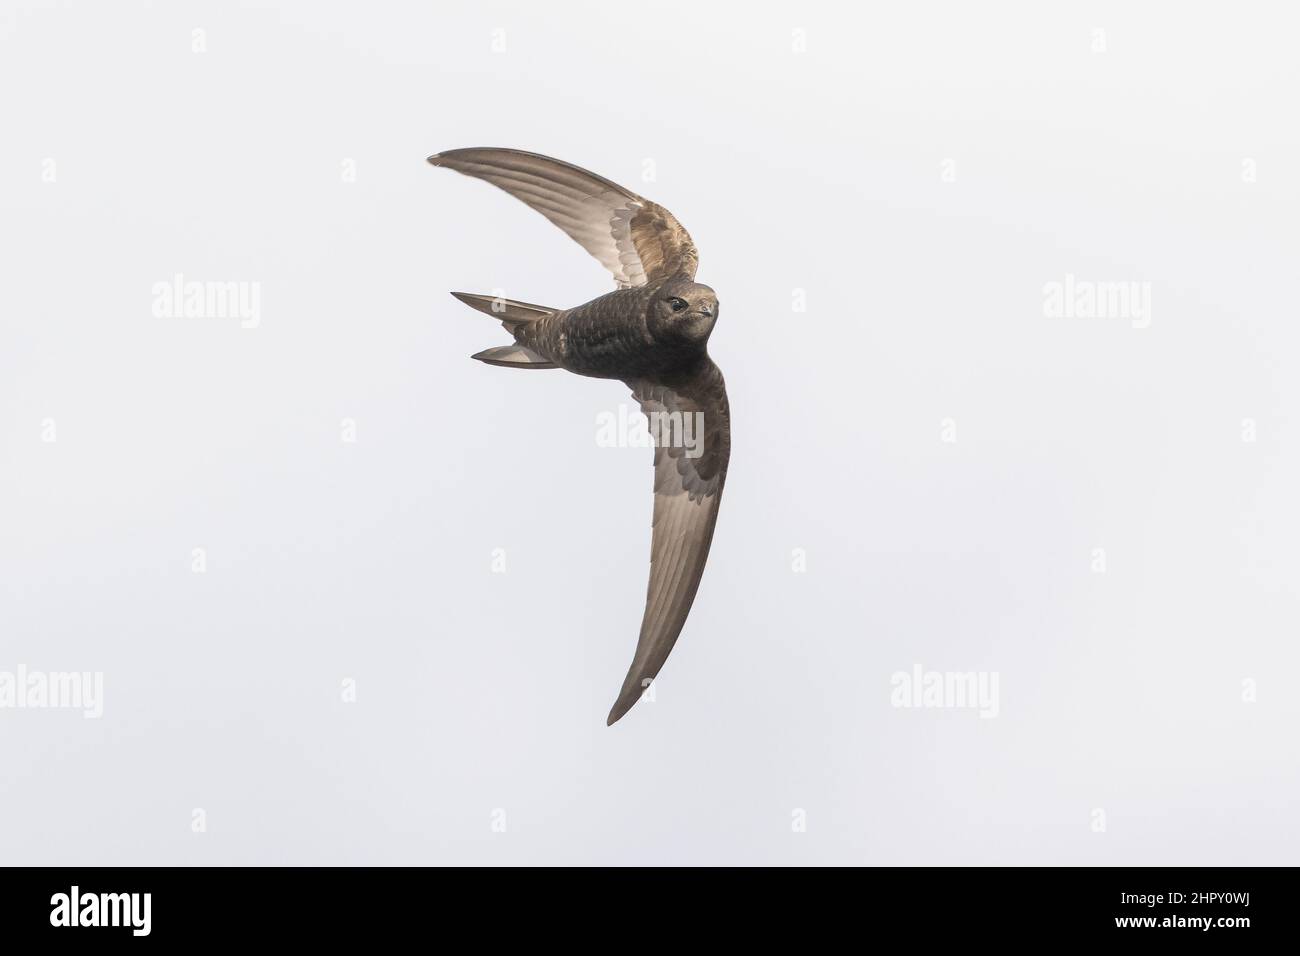 Common swift Apus apus, swallow bird in flight against a white background Stock Photo